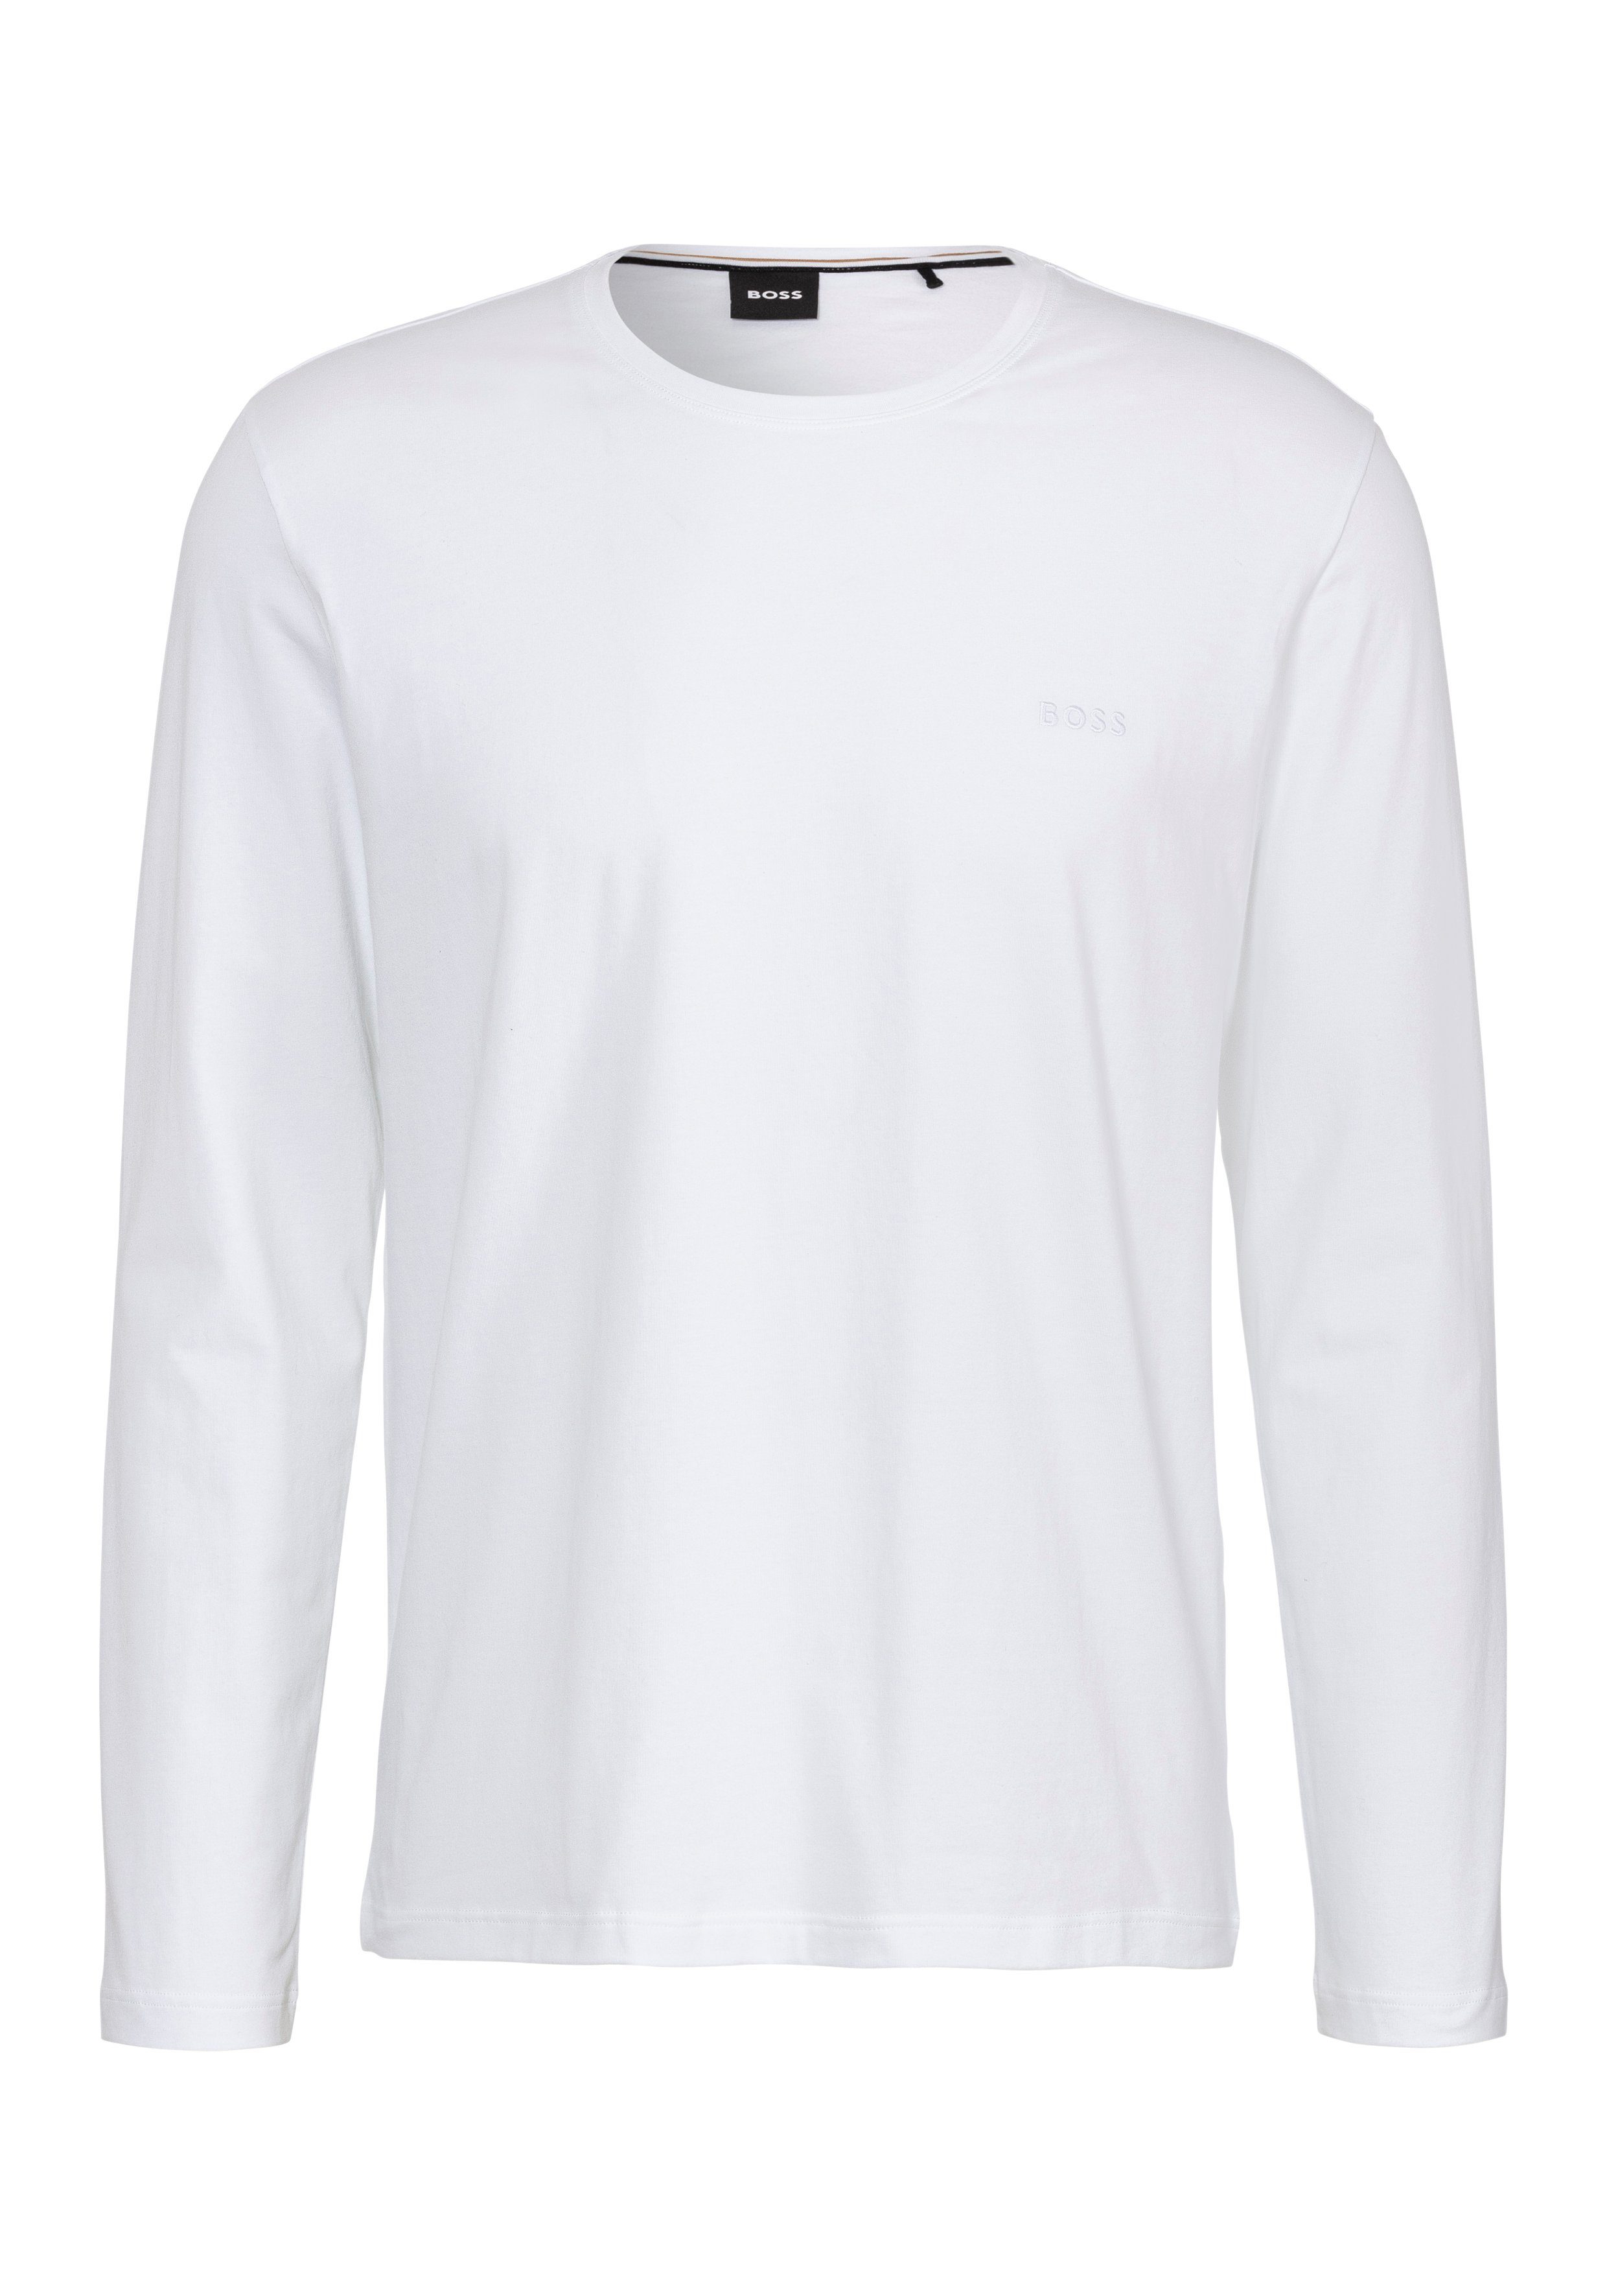 Stickerei Langarmshirt mit der White BOSS BOSS Brust Mix&Match 100 R LS-Shirt auf